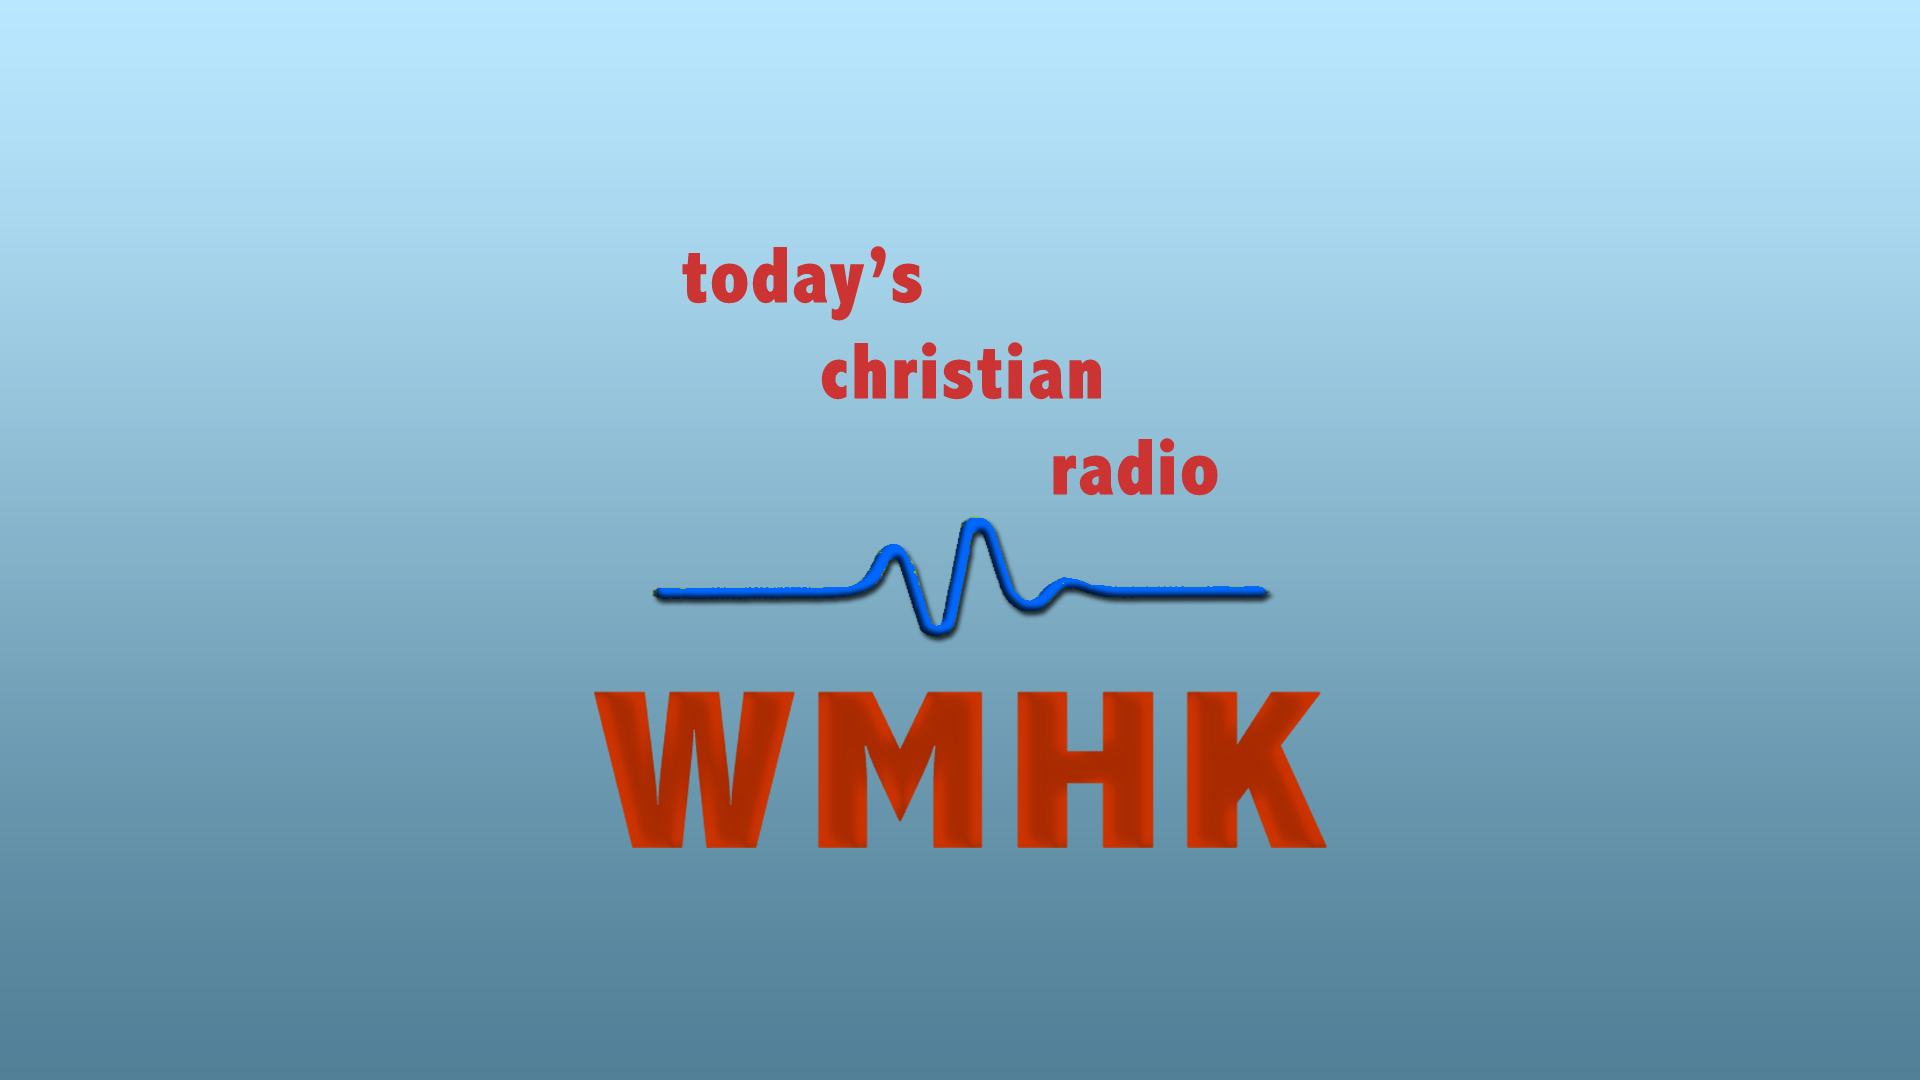 TODAY'S CHRISTIAN RADIO WMHK